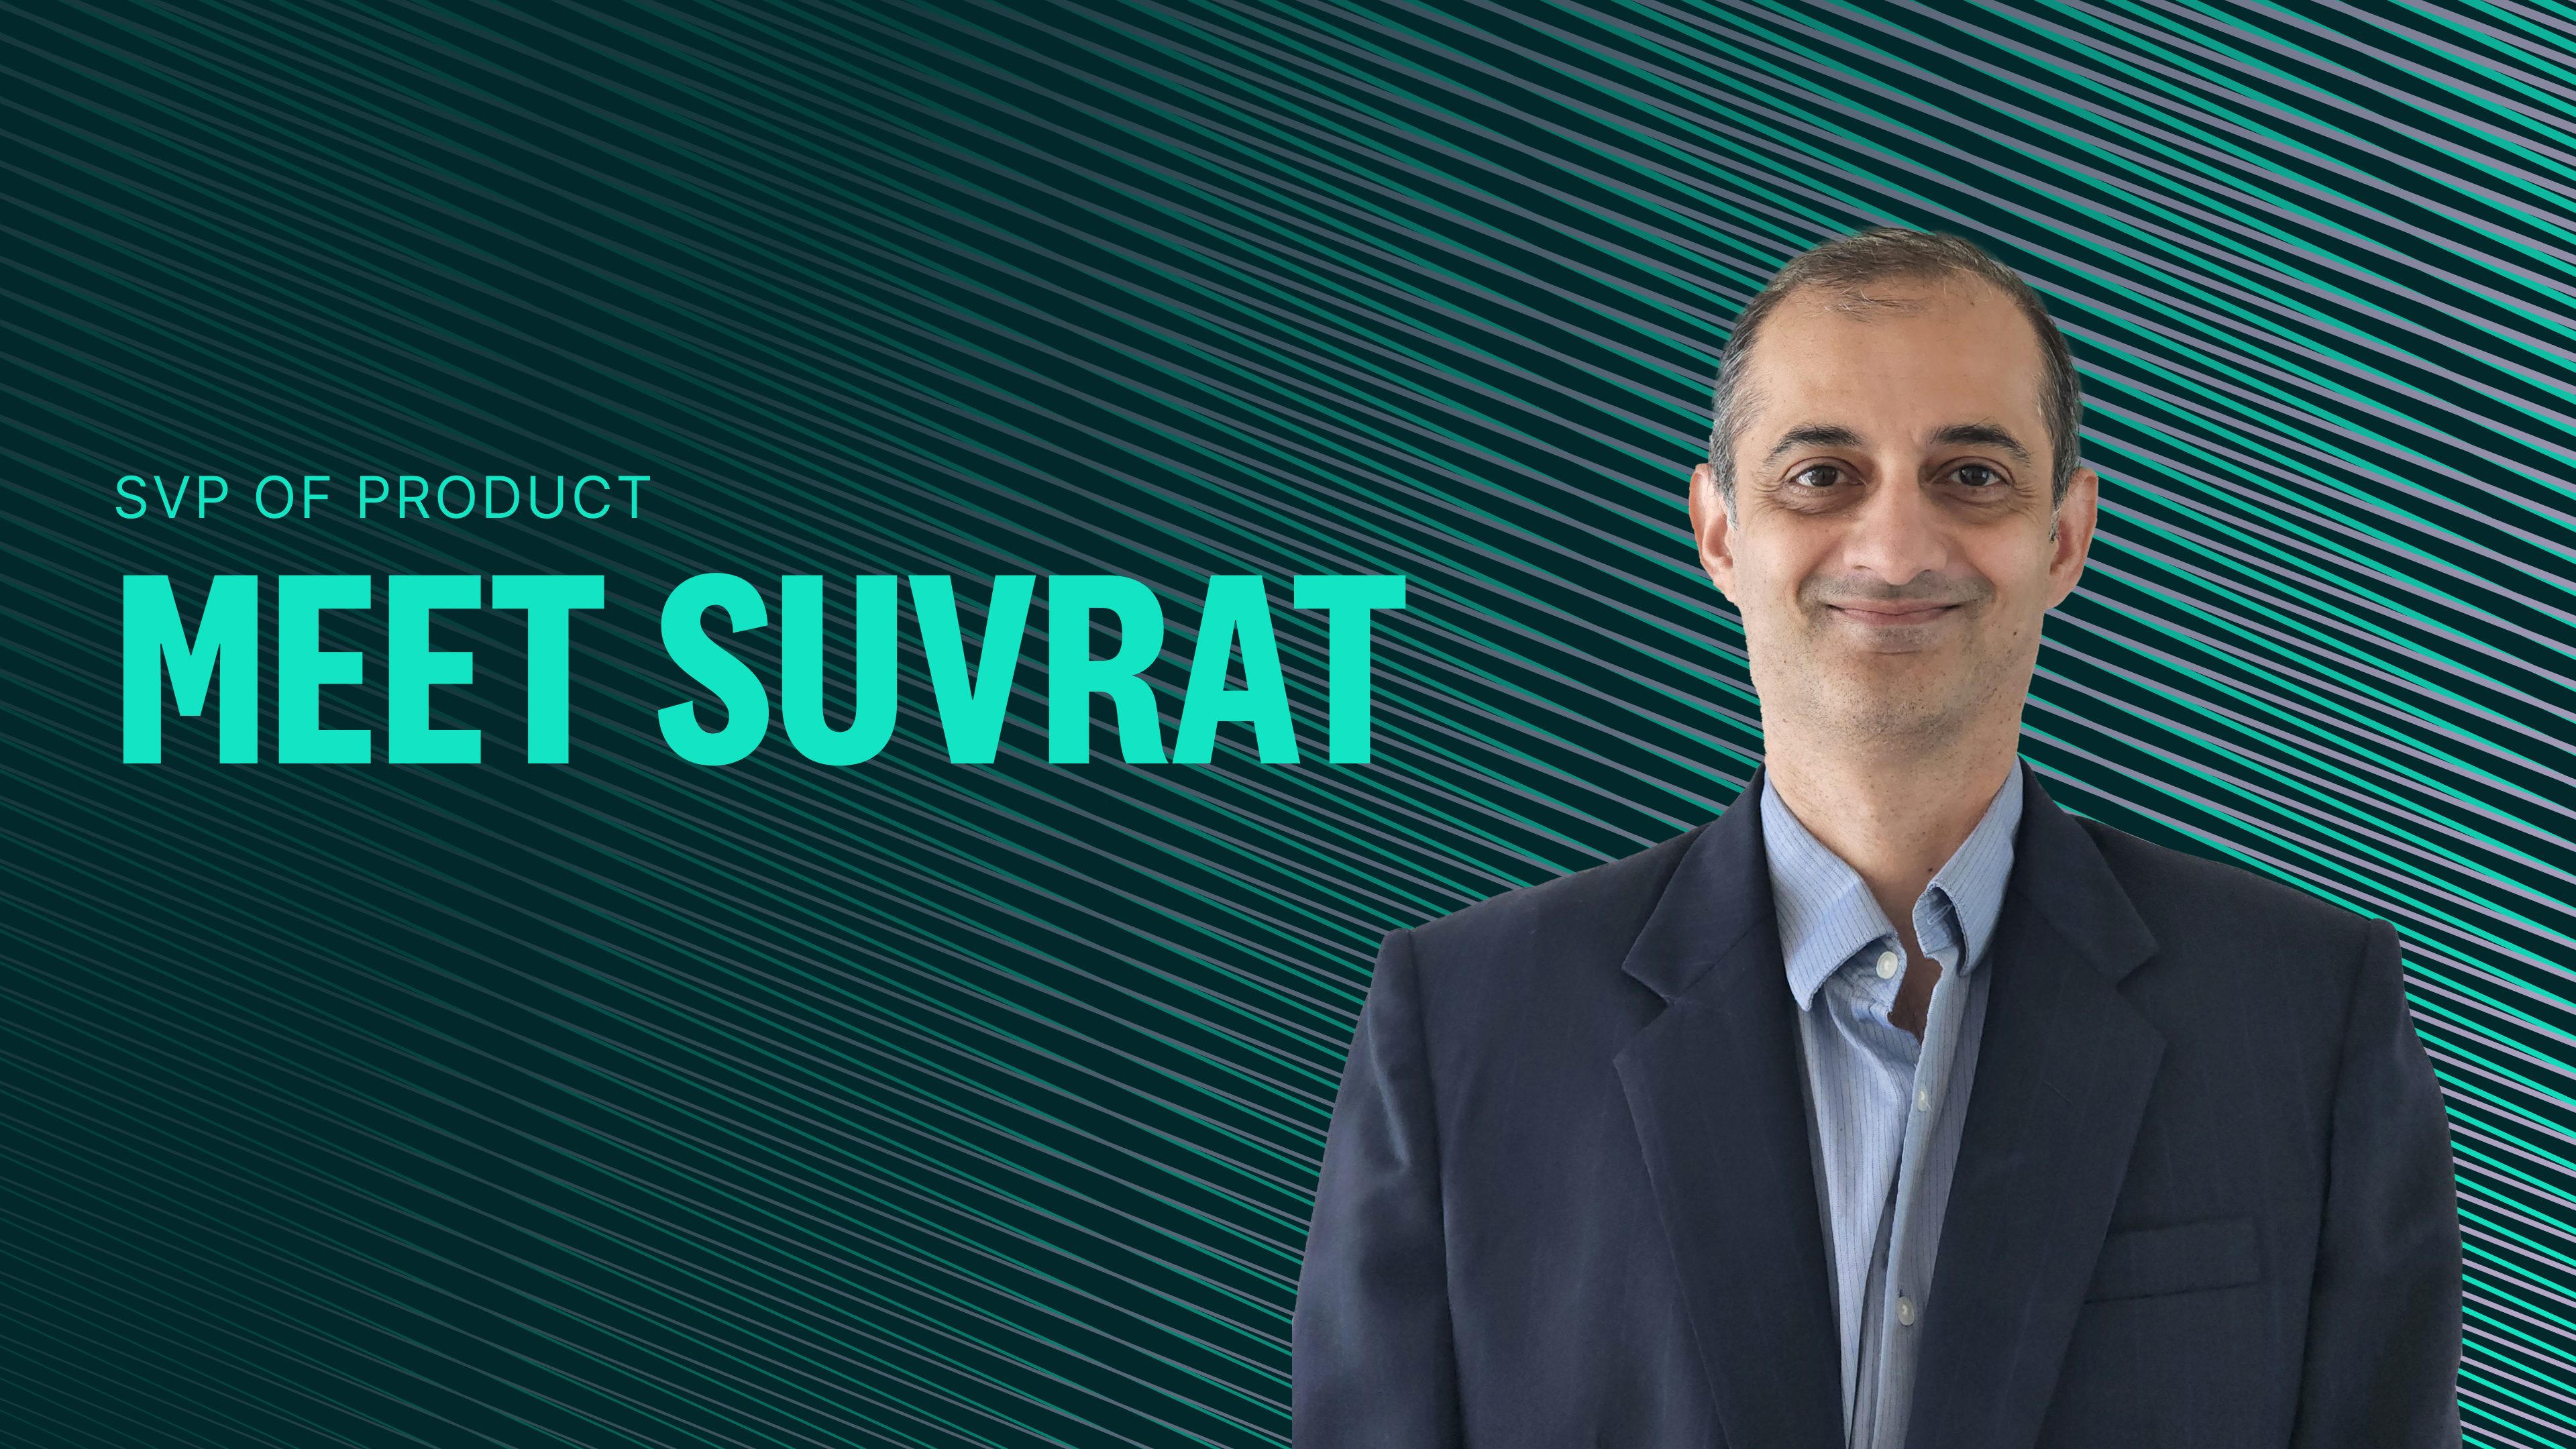 Suvrat Joshi joins Veriff as Senior Vice President of Product